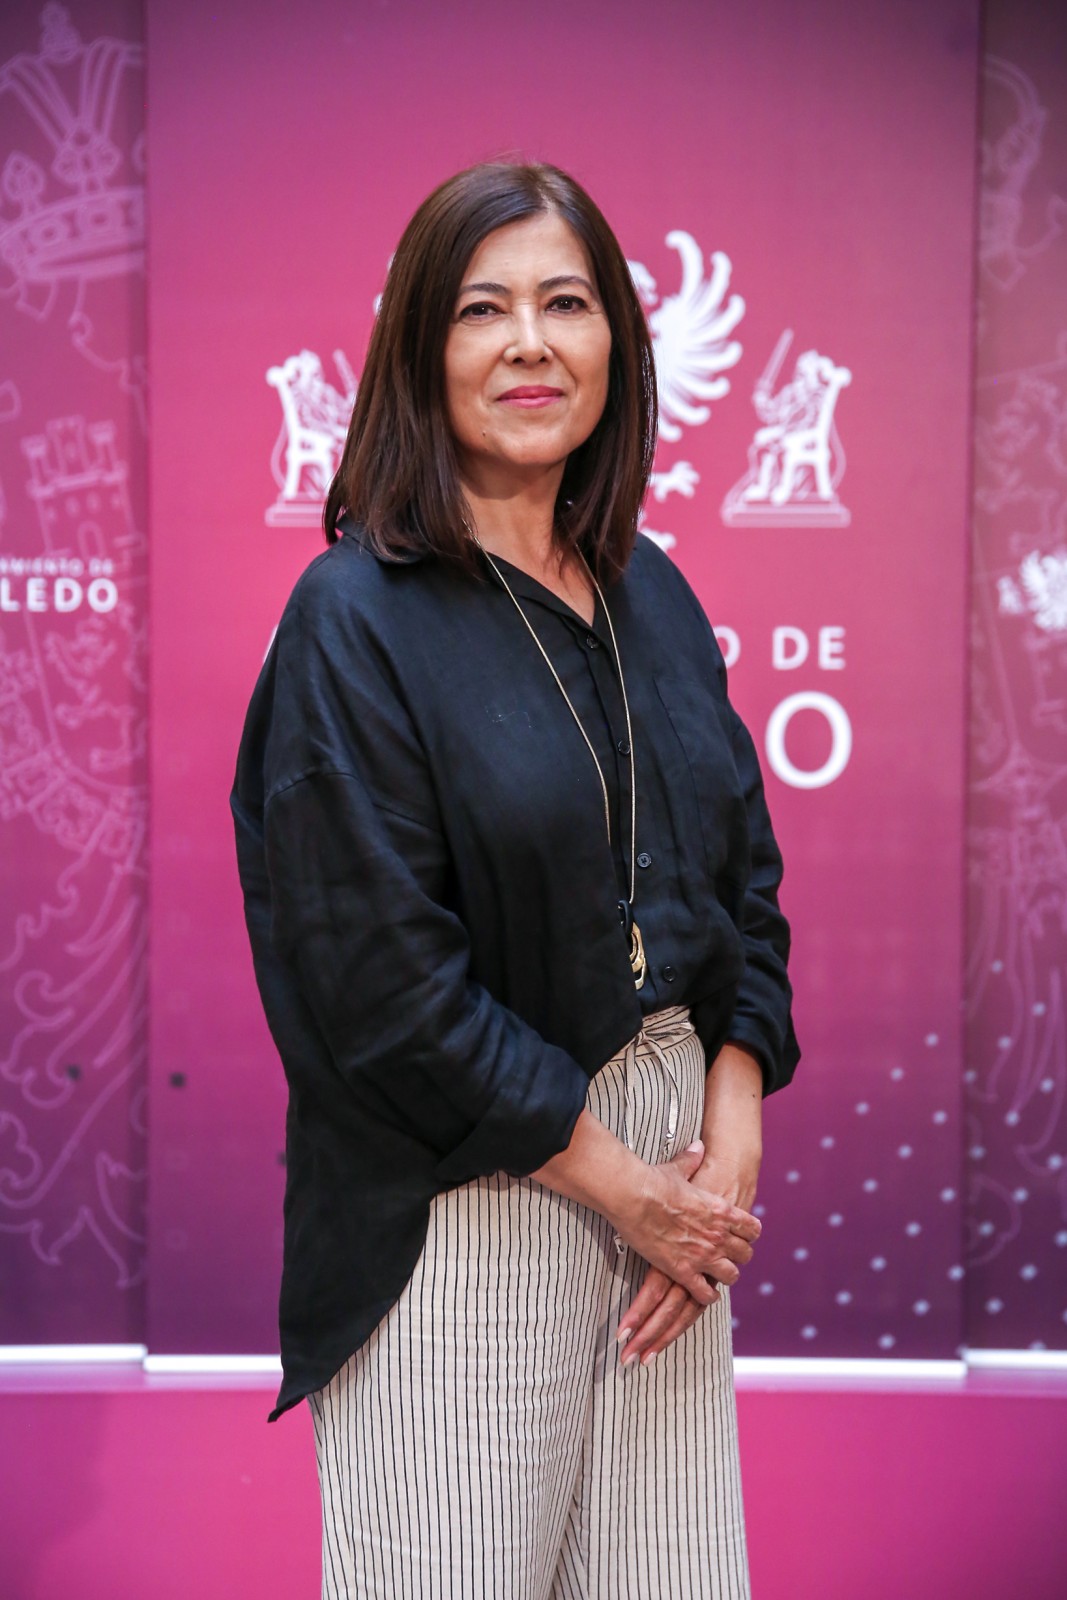 Alicia Escalante Rodríguez